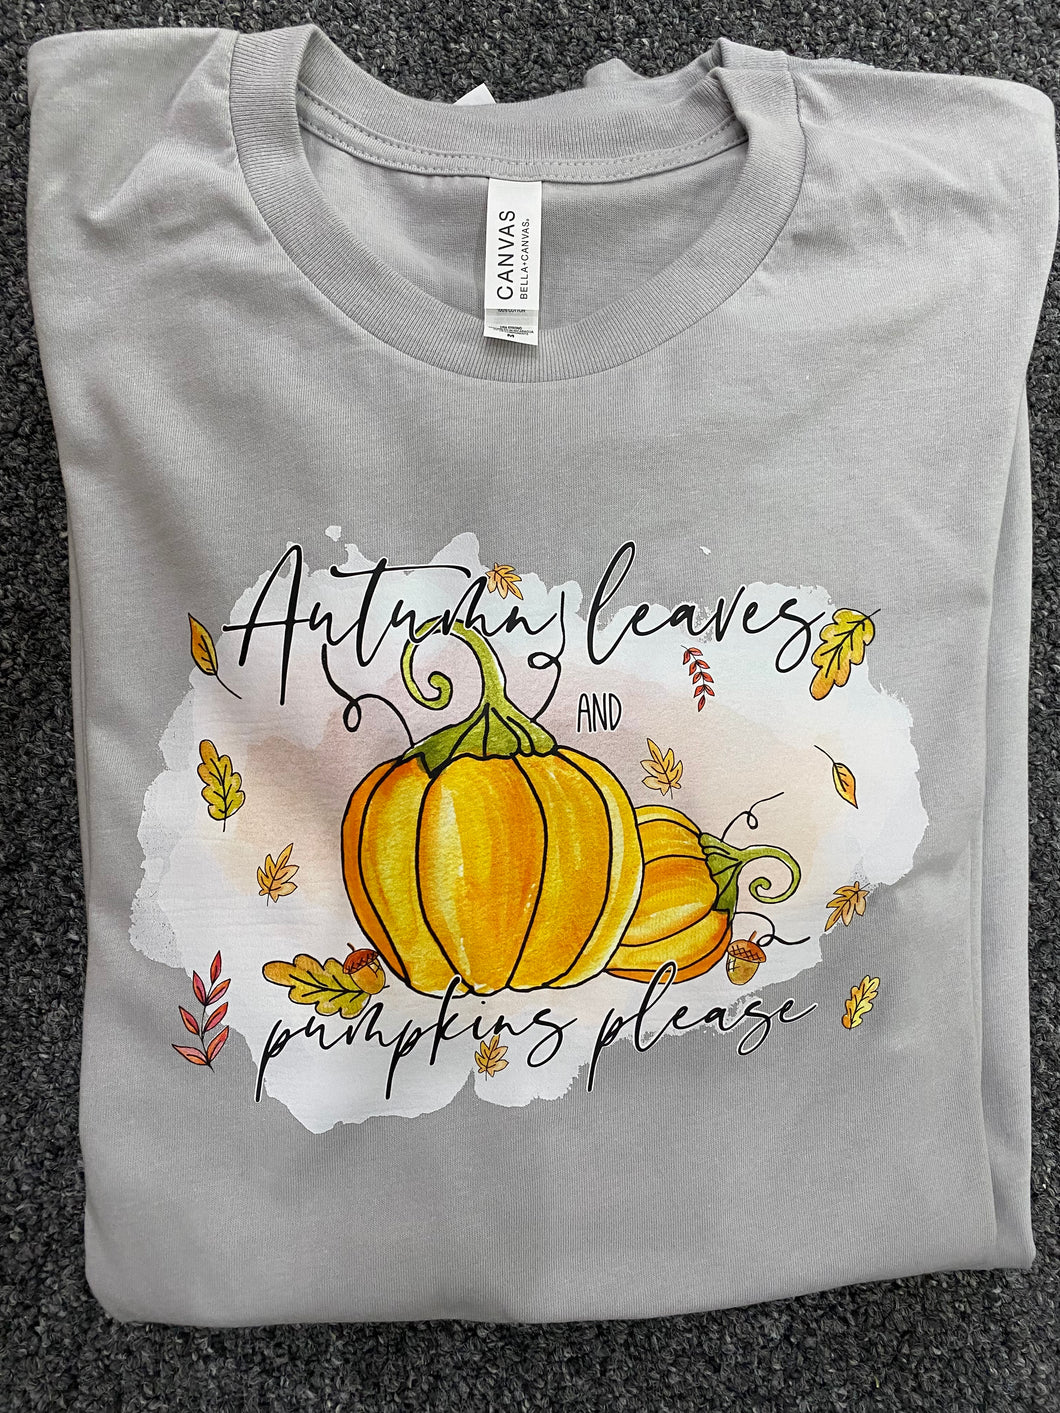 Autumn Leaves and Pumpkins Please - T-Shirt